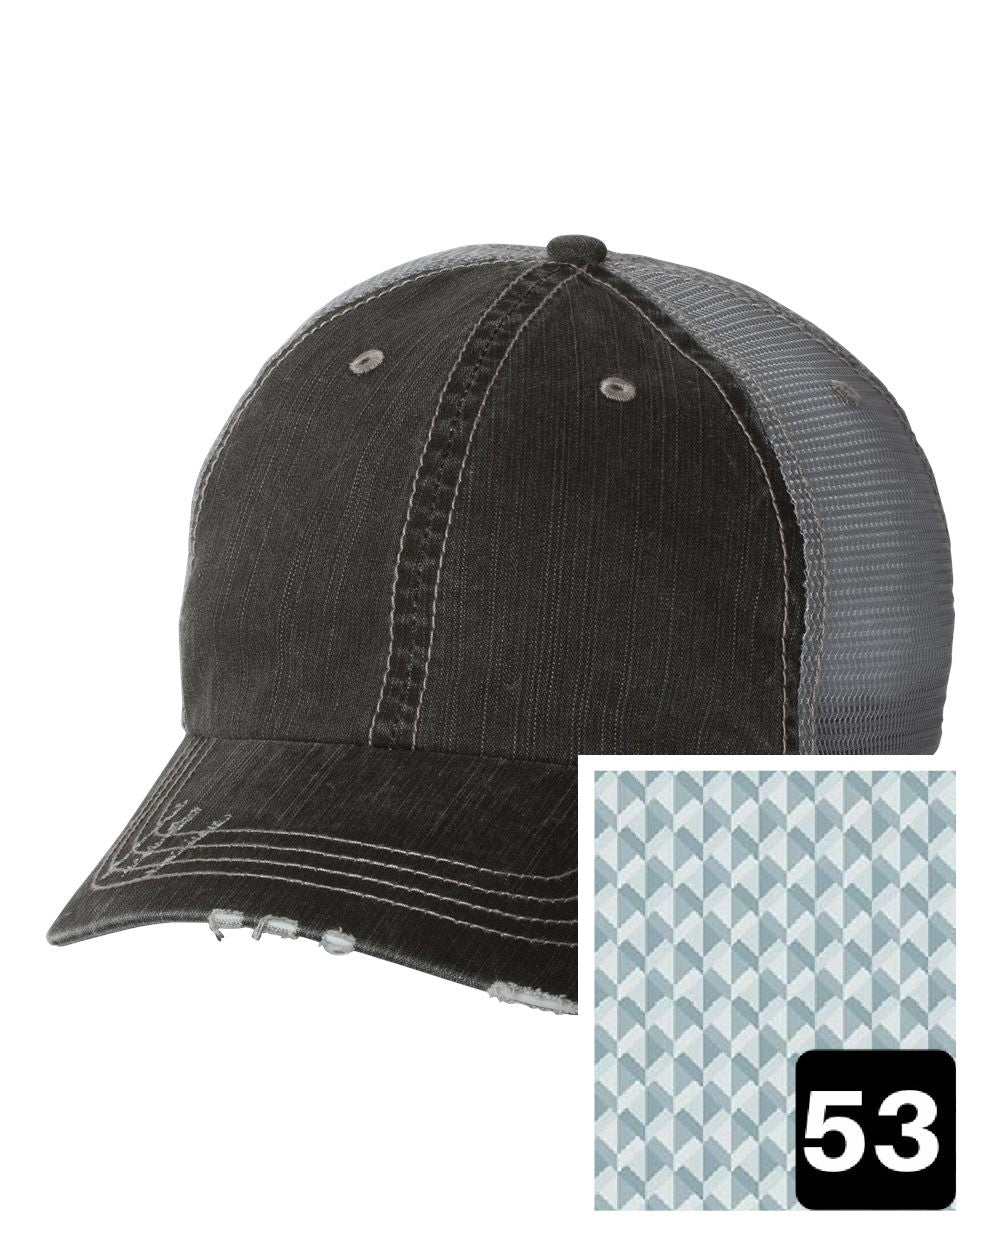 gray distressed trucker hat with multi-color stripe fabric state of Nebraska